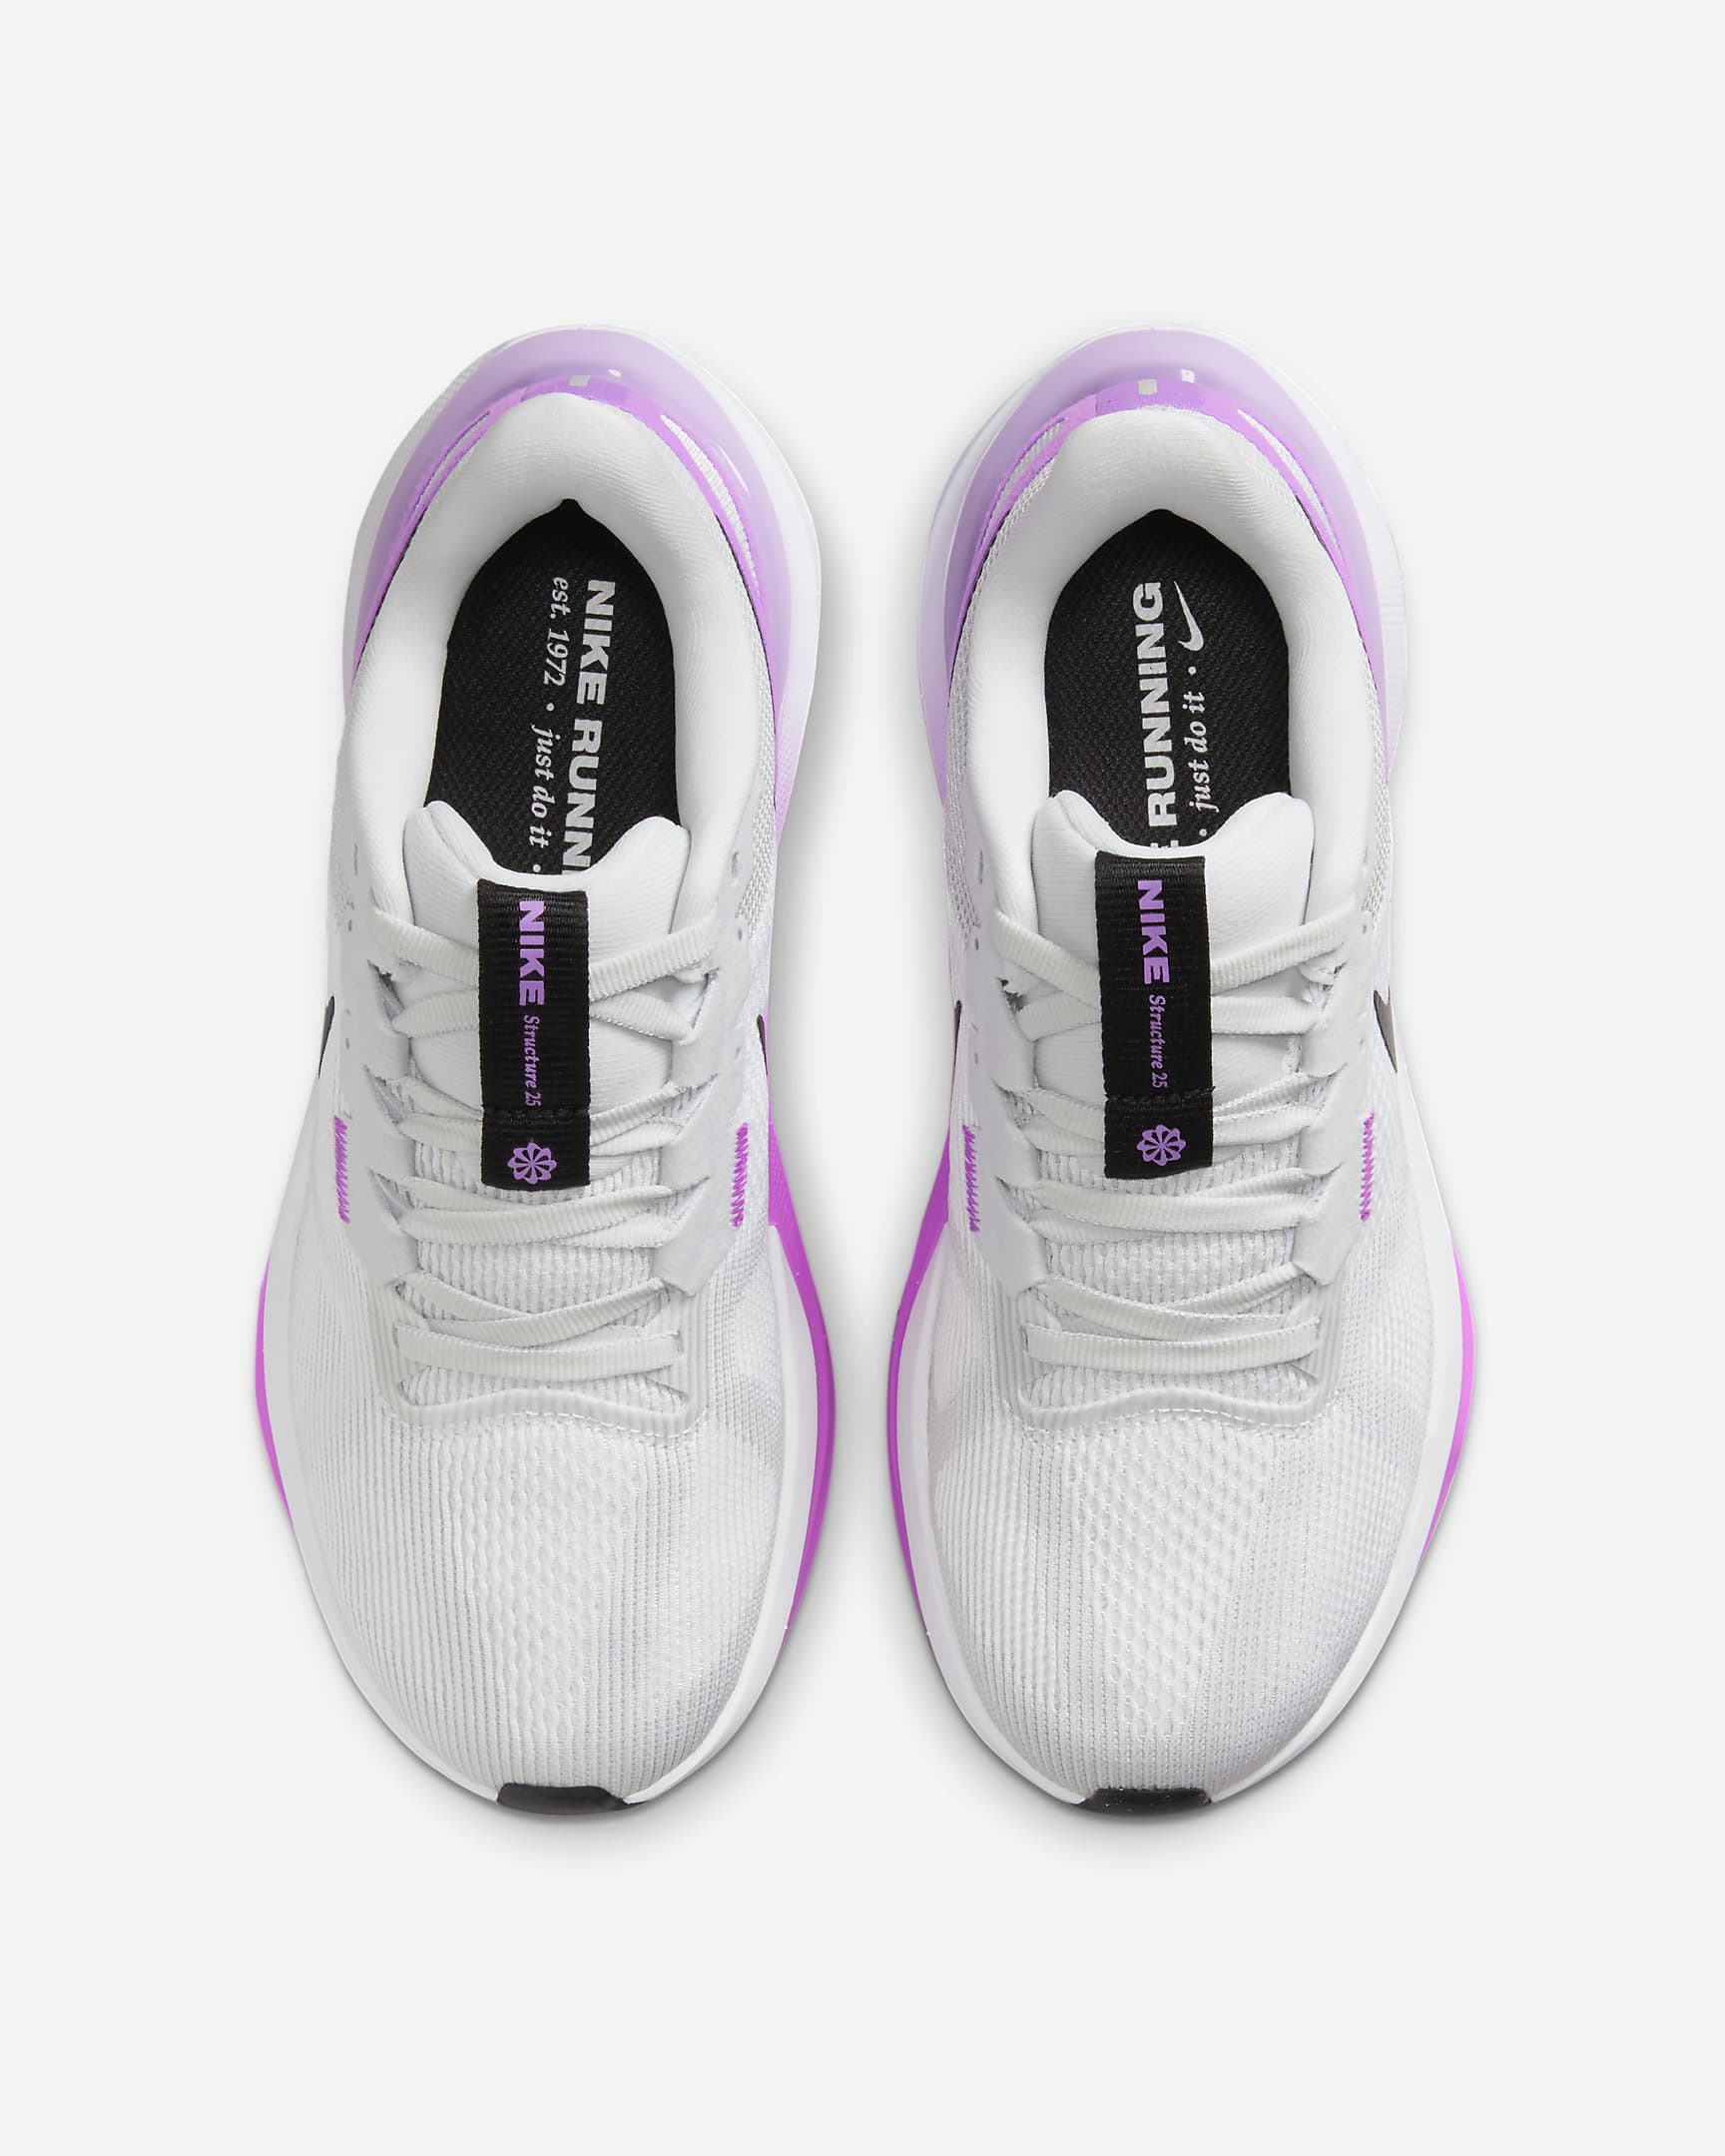 Nike Structure 25 Women's Road Running Shoes - White/Pure Platinum/Fuchsia Dream/Black